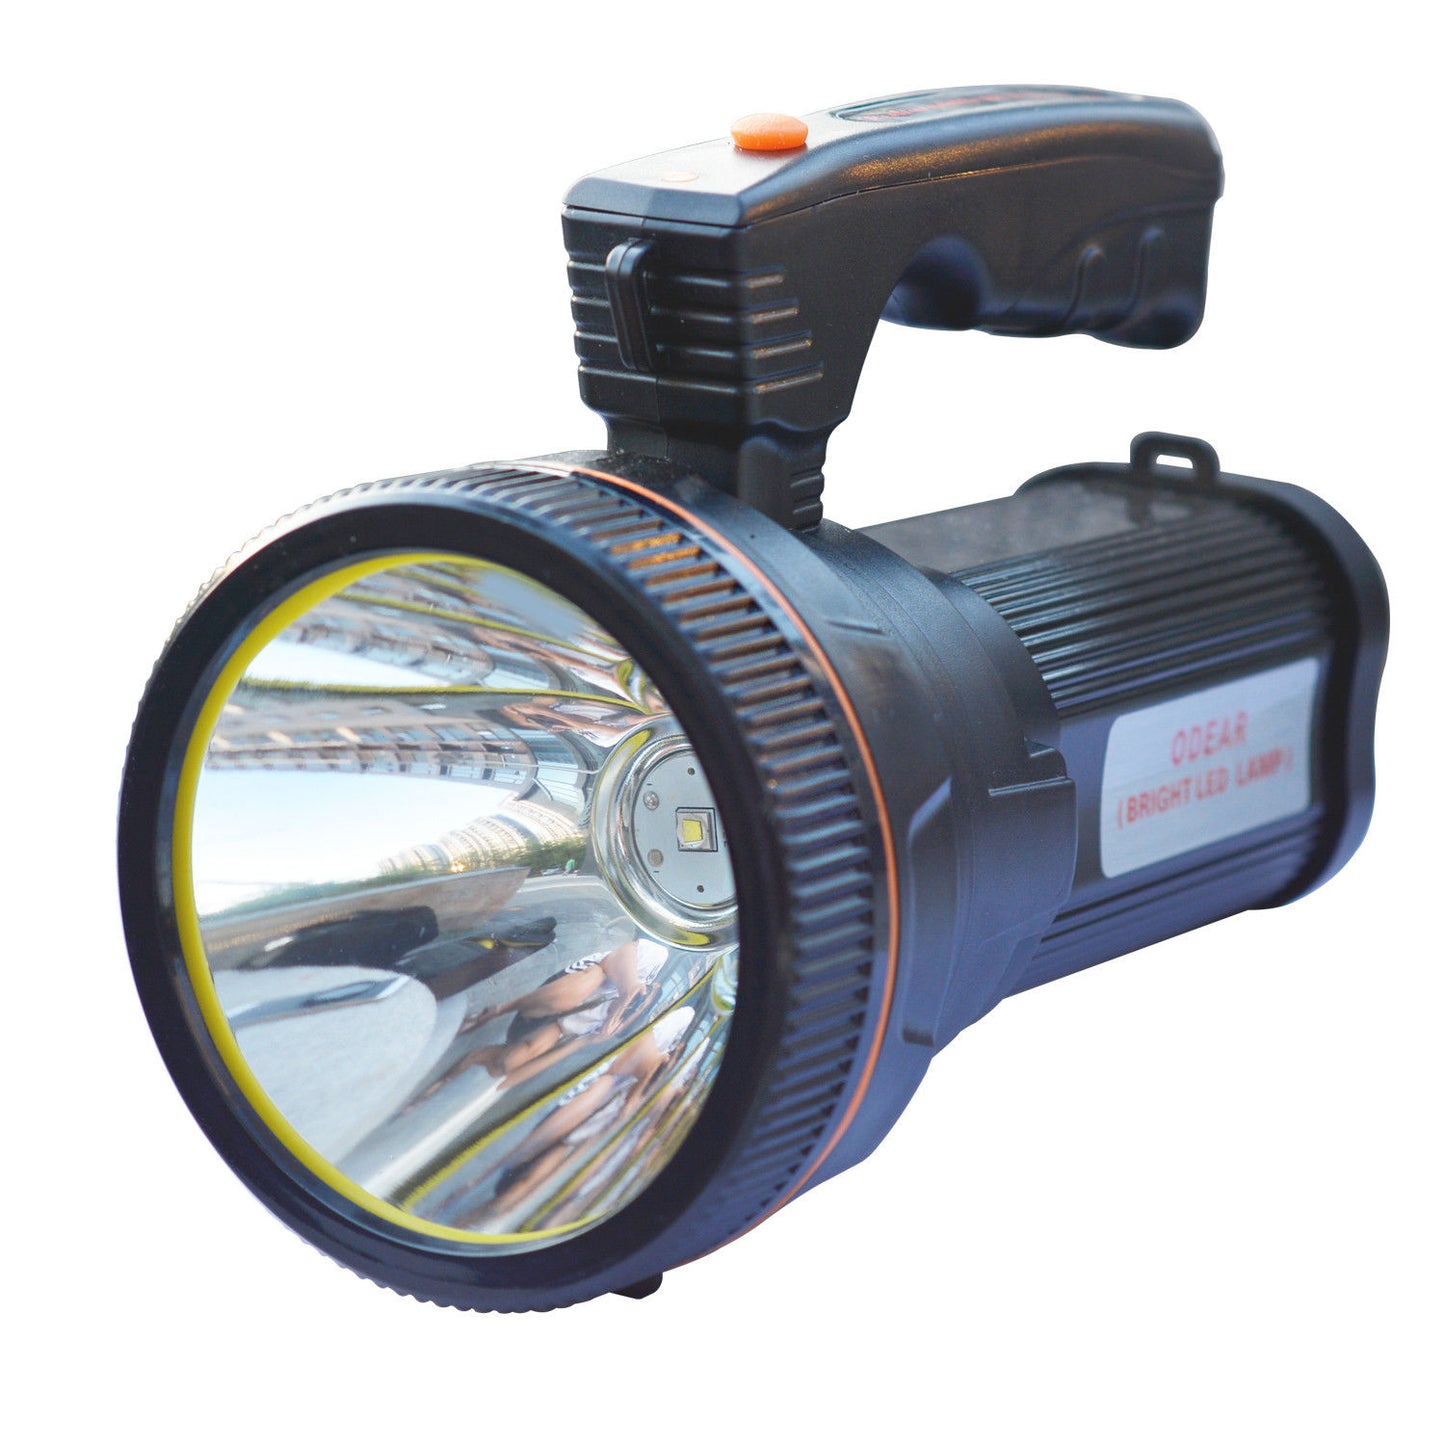 Bright Spotlight Handheld Portable Searchlight LED Rechargeable Flashlight